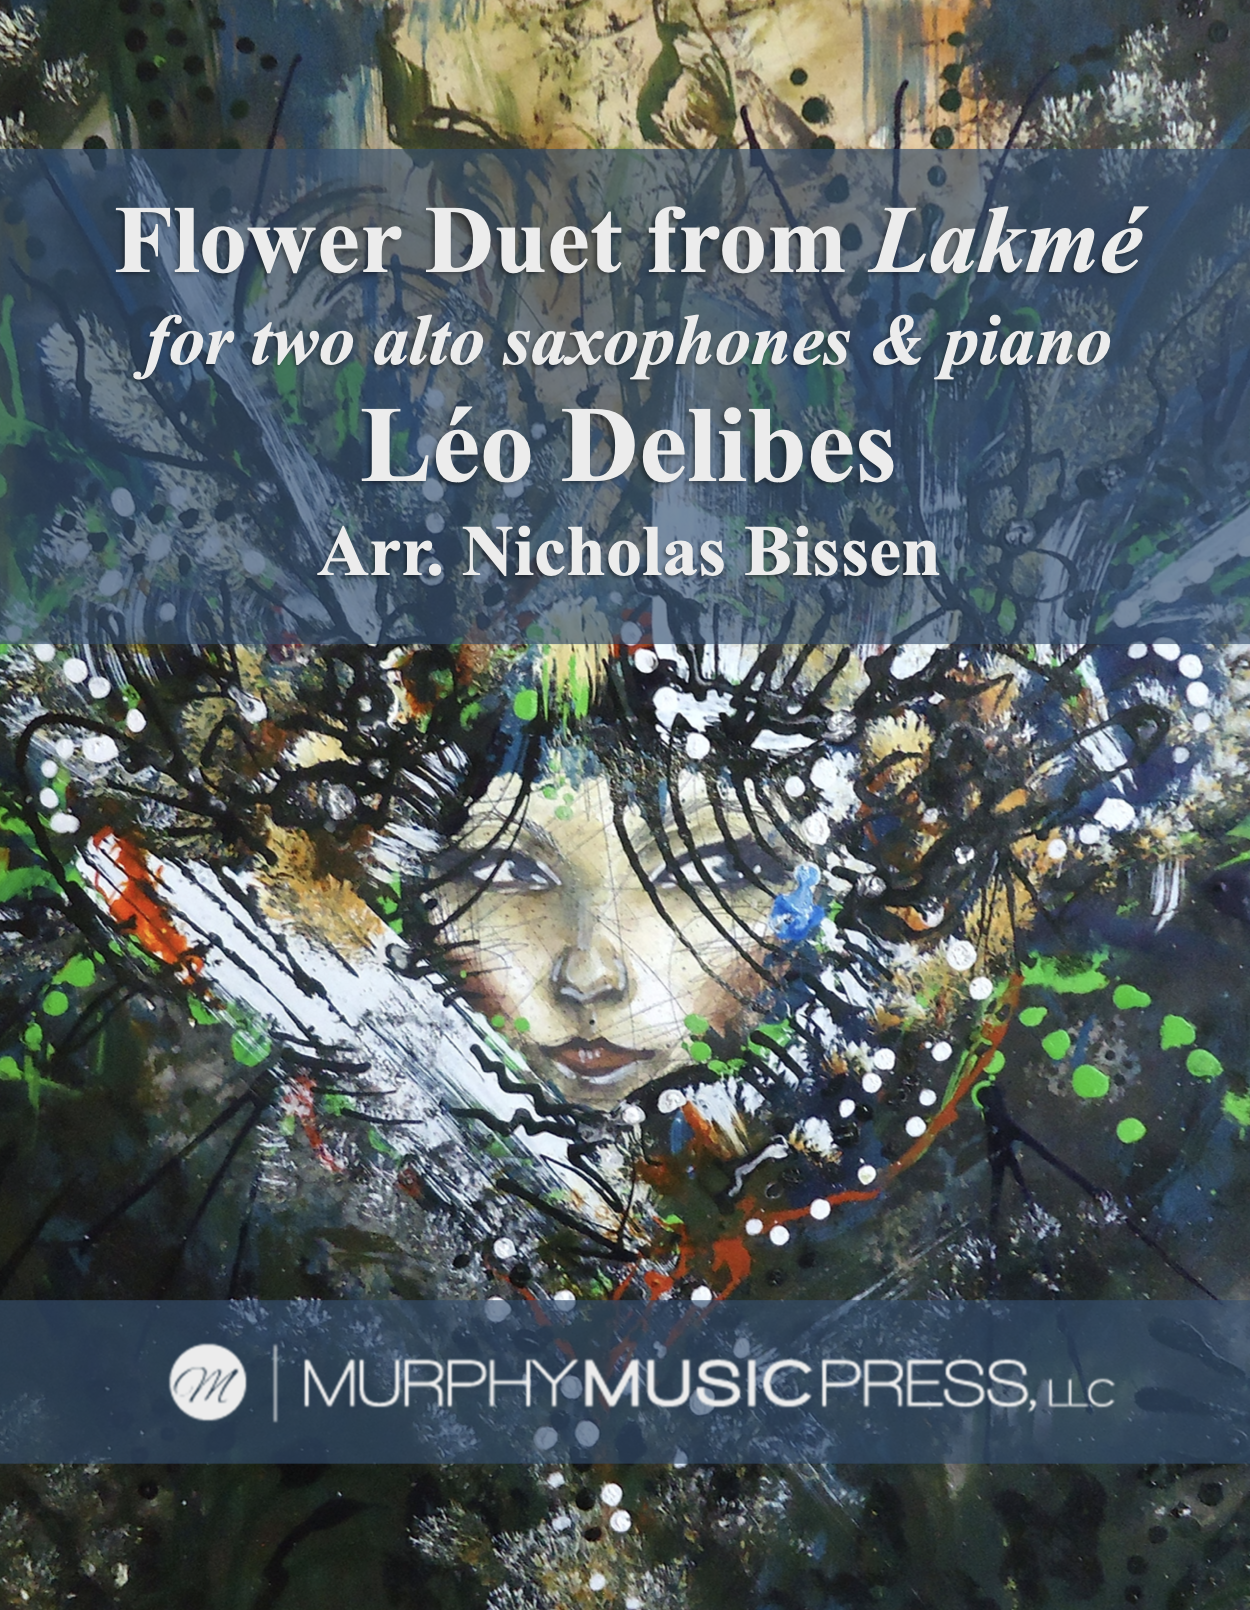 The Flower Duet (Alto Version) by arr. Nicholas Bissen